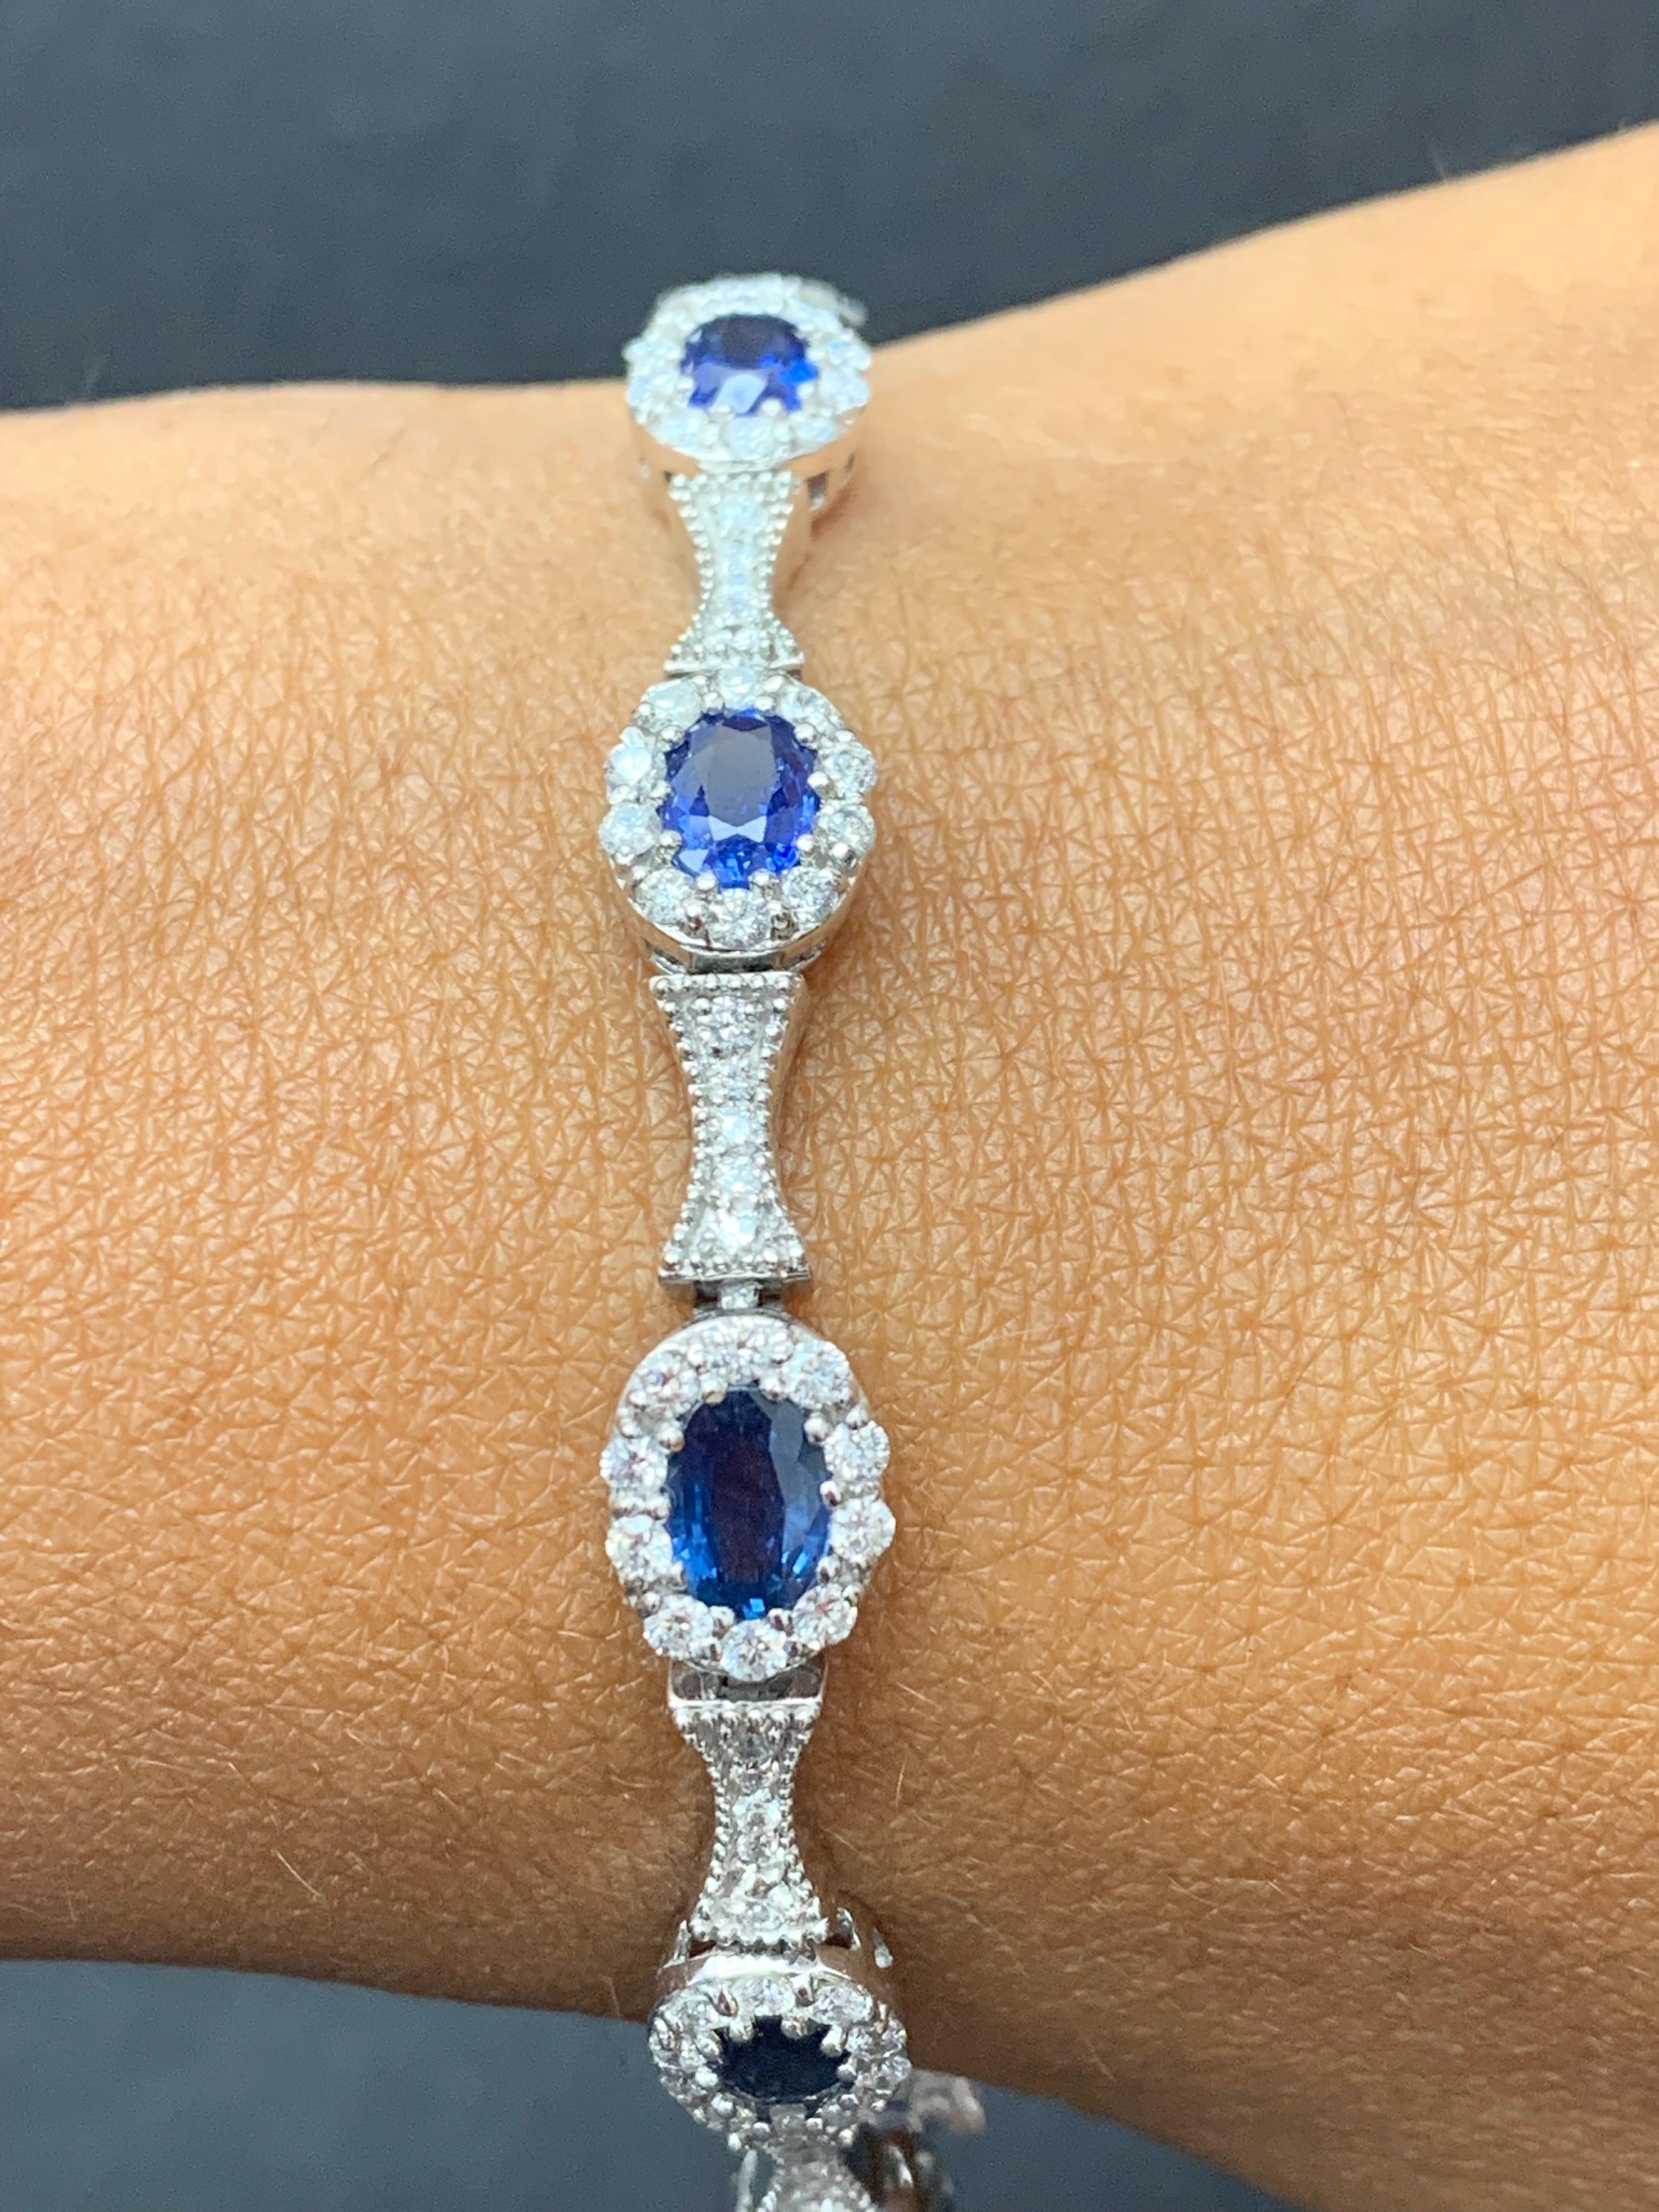 6.19 Carat Oval Cut Blue Sapphire Diamond Bracelet in 14K White Gold For Sale 7